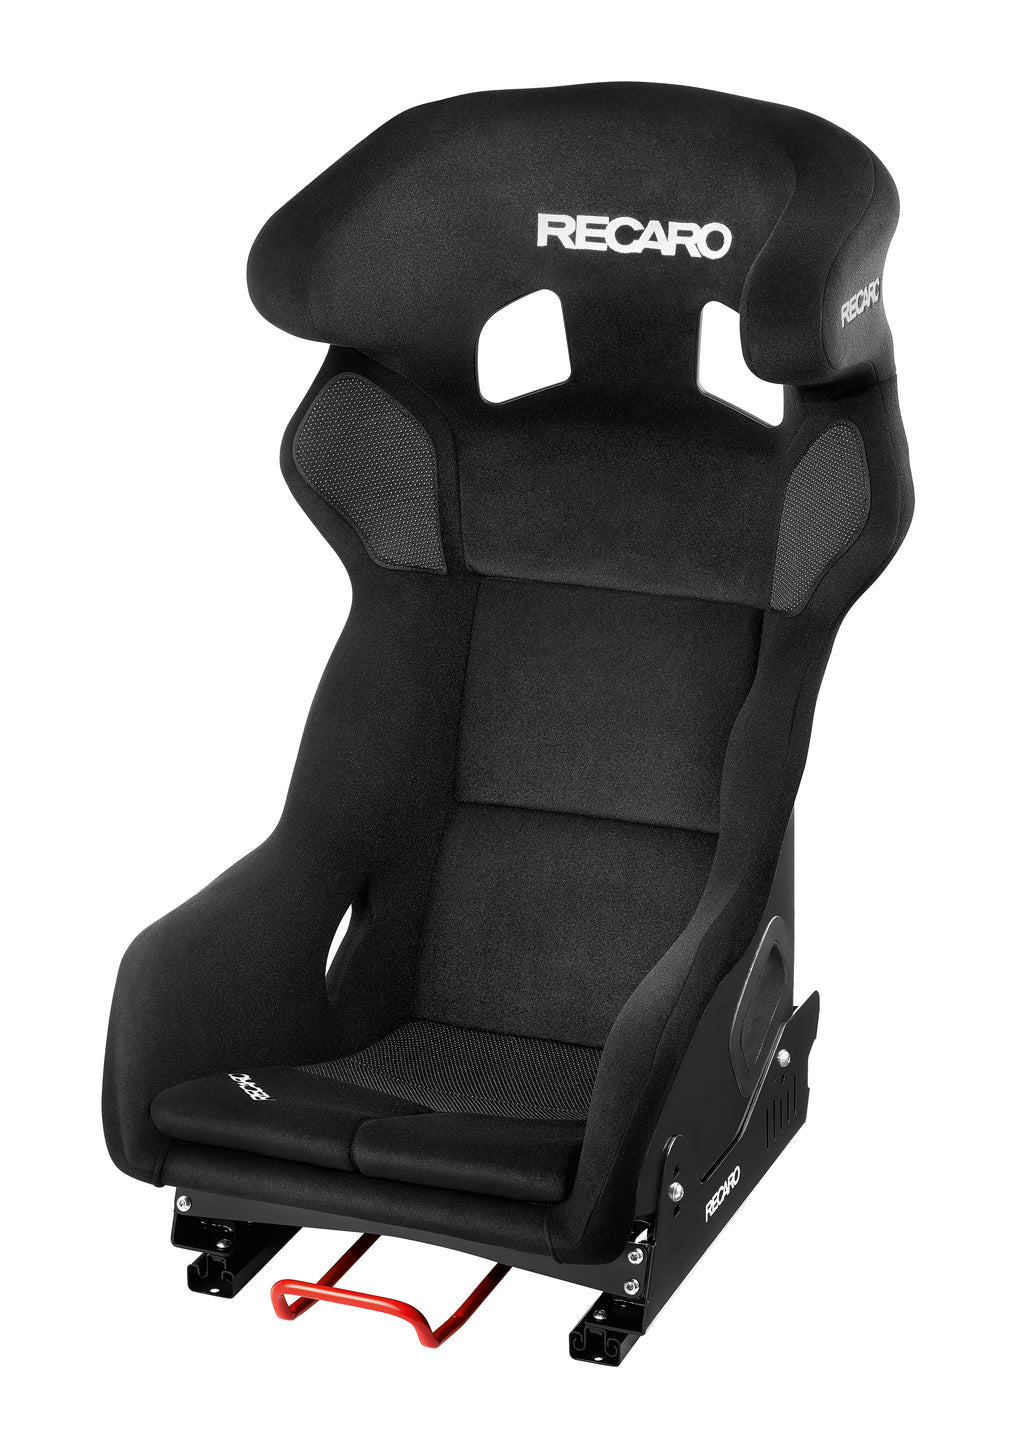 Recaro - Pro Racer XL SPA Seat